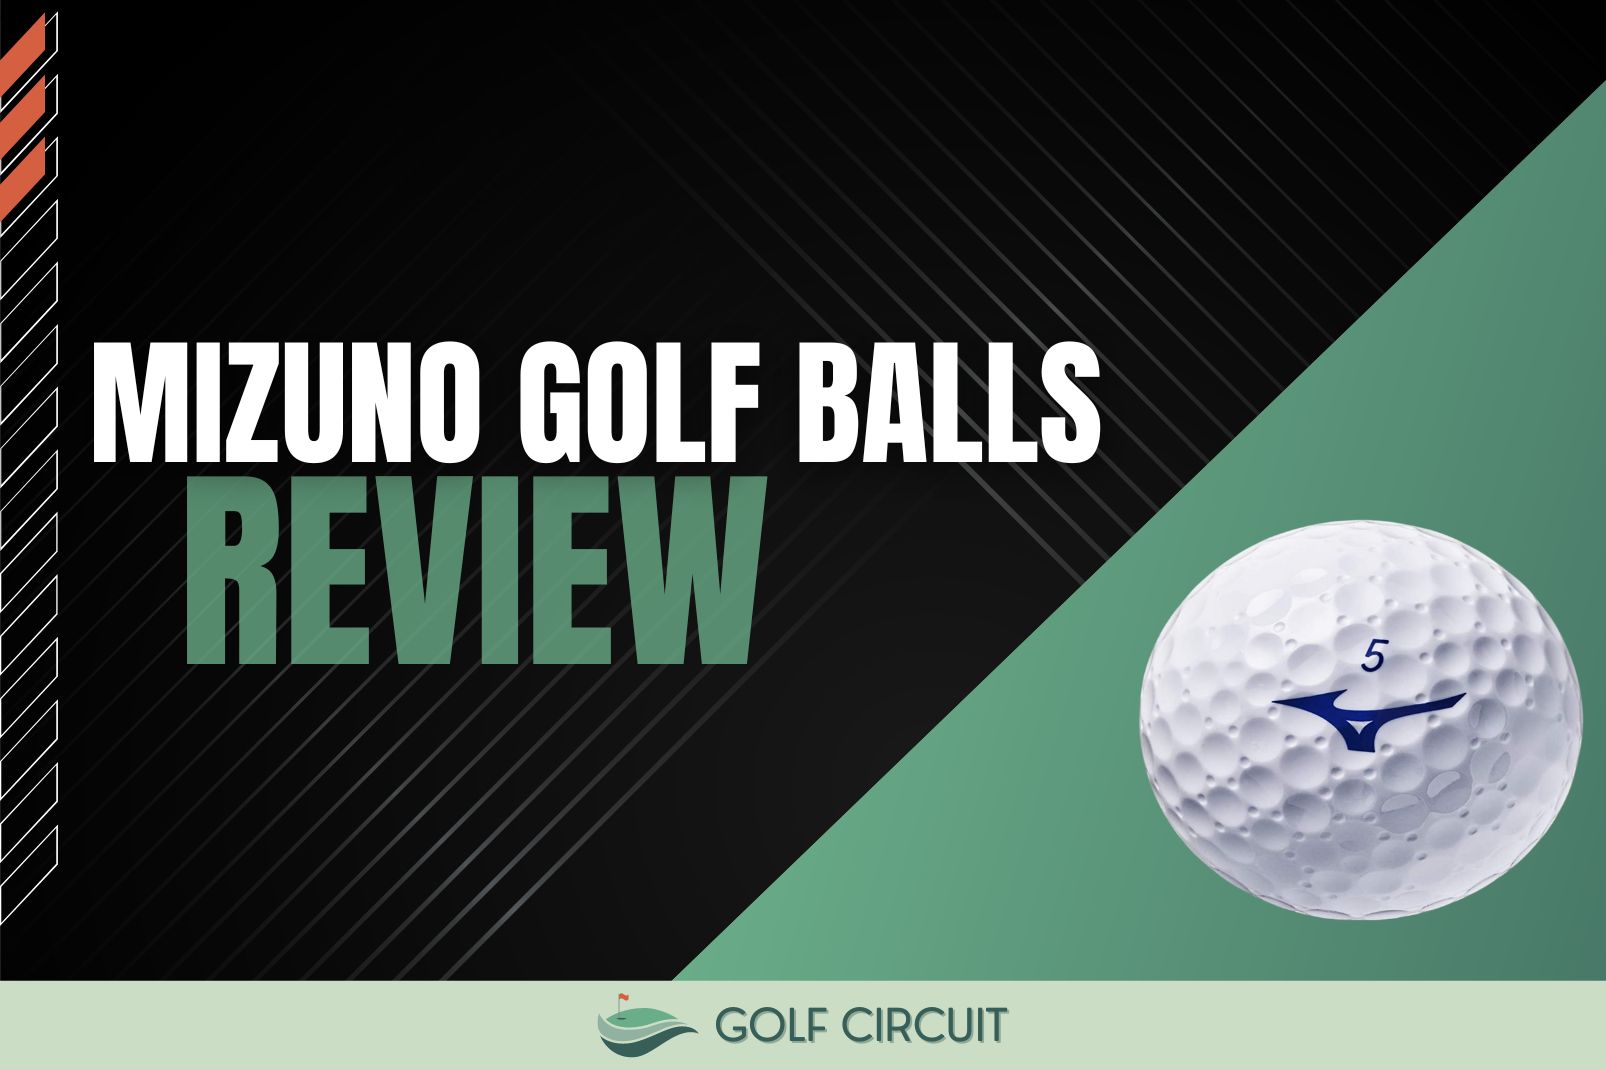 We Tried All 4 Mizuno Golf Balls (They Were Amazing) - Golf Circuit